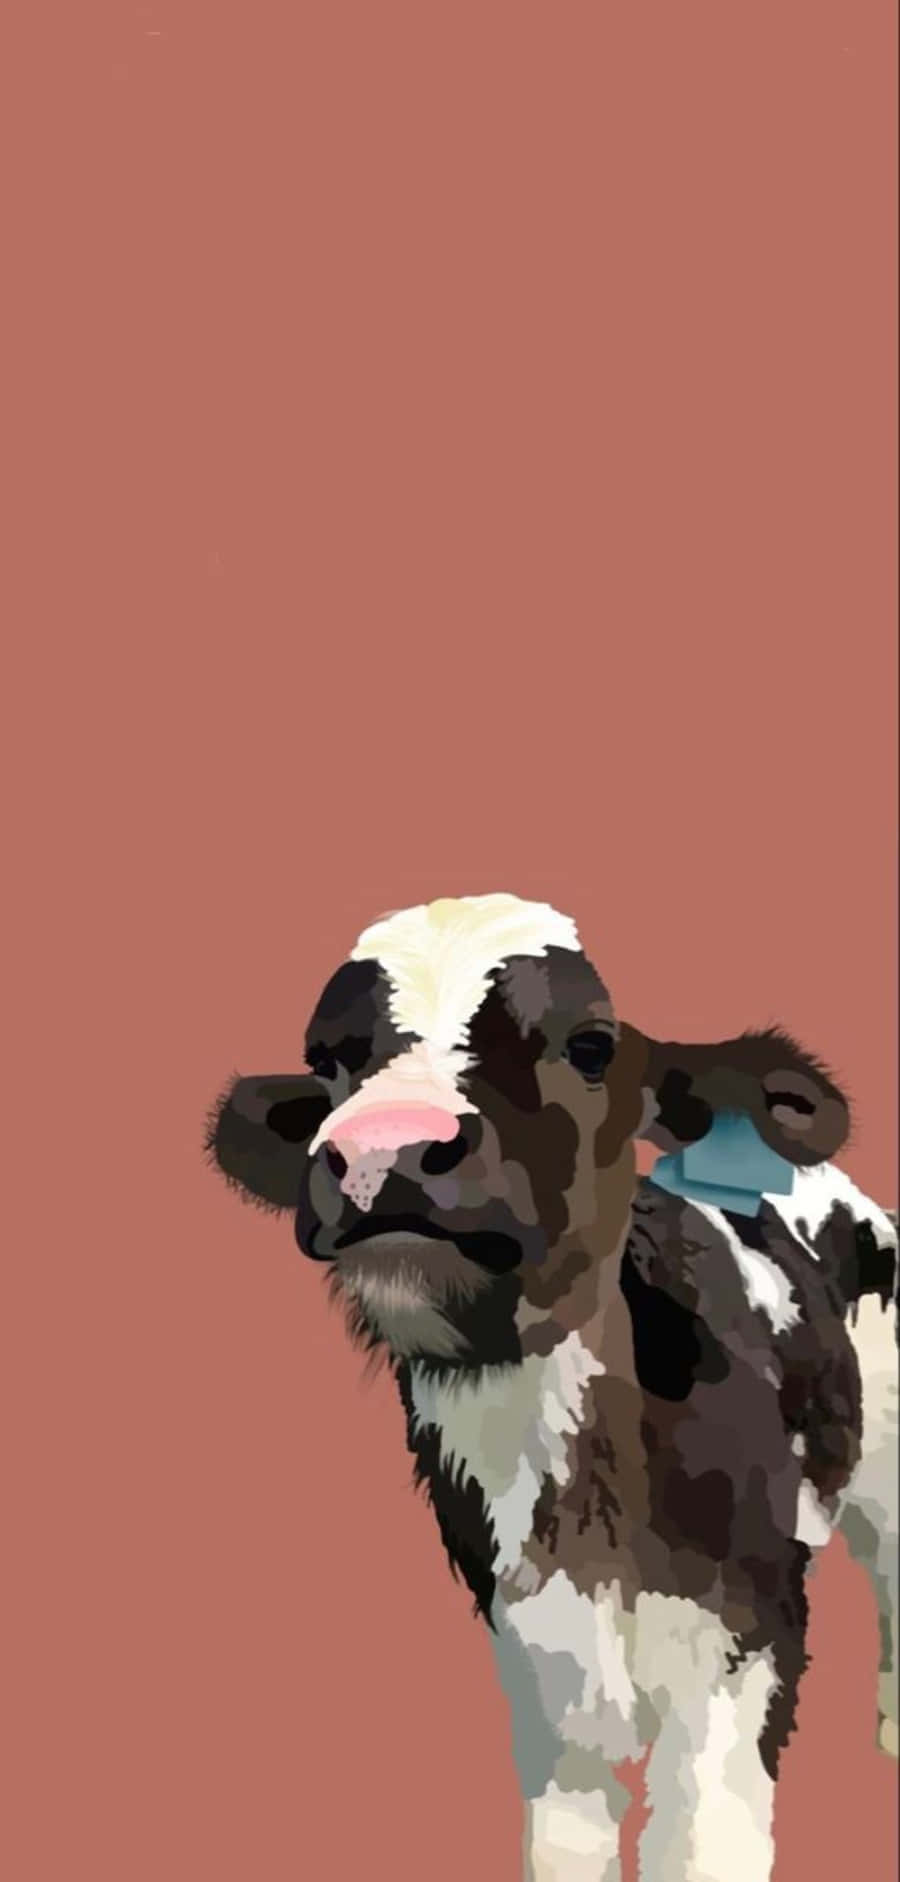 Wallpaper ID 374284  Animal Cow Phone Wallpaper Grass 1080x2160 free  download